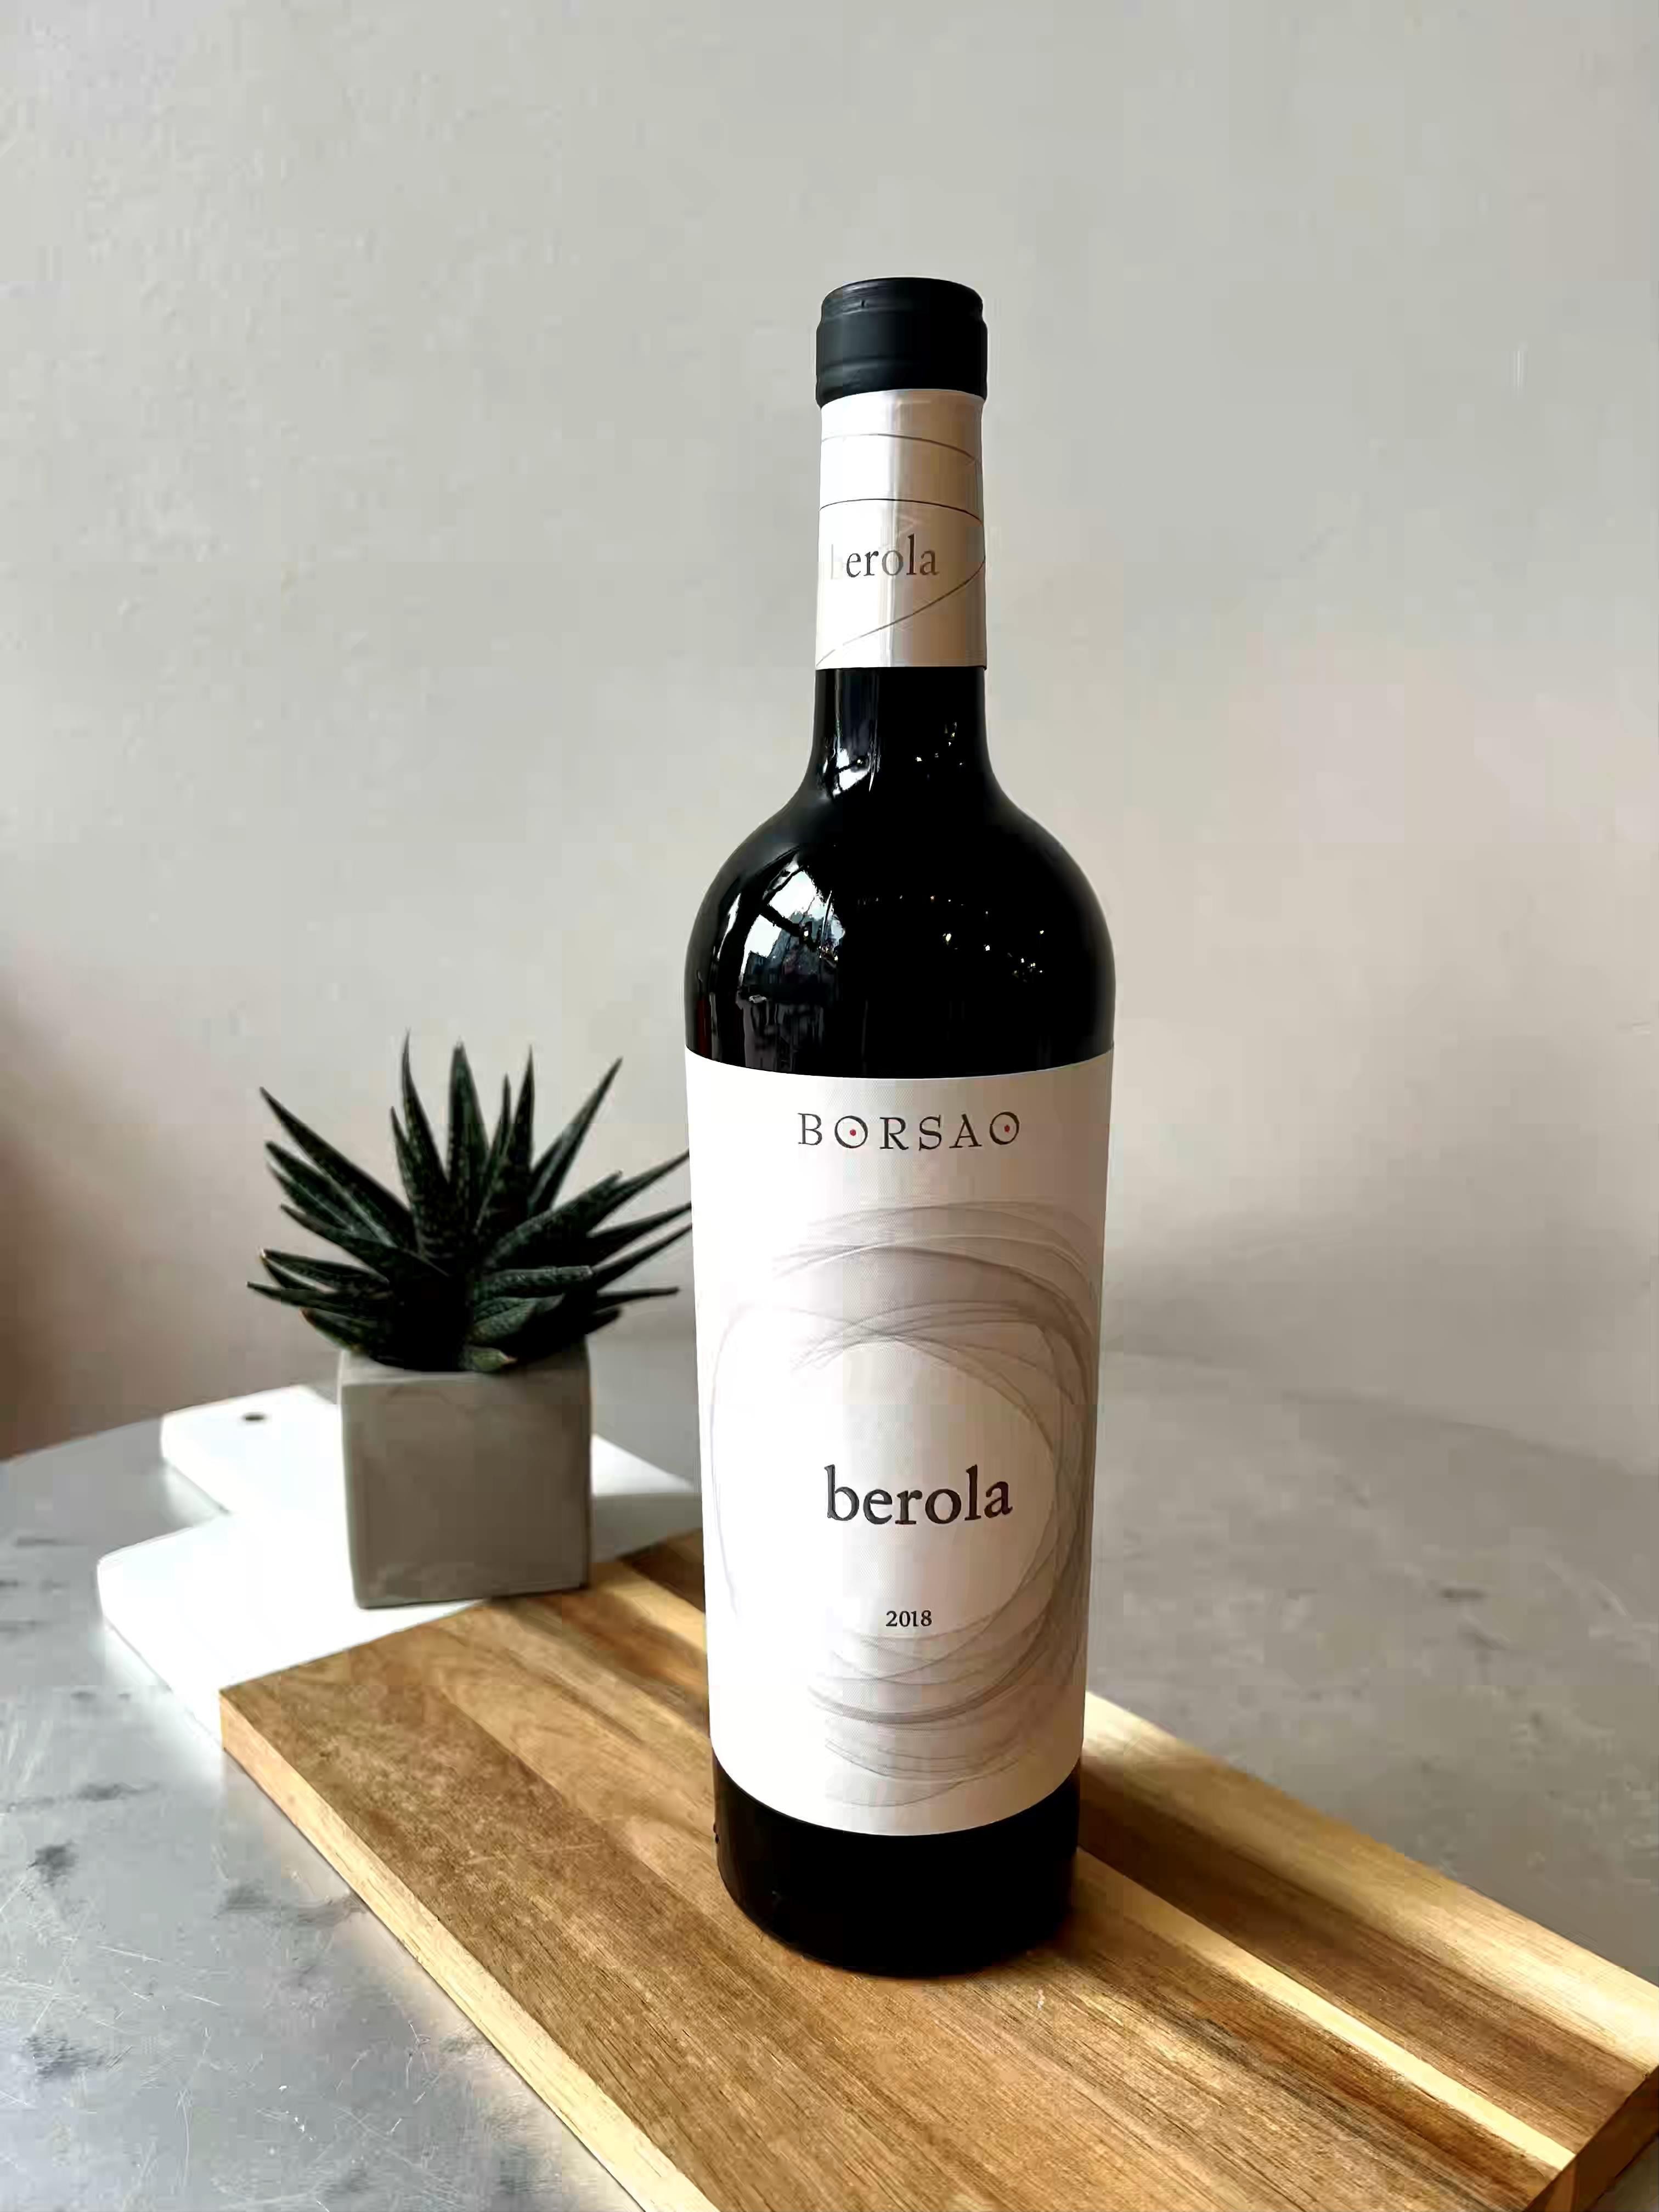 Bodega Borsao "Berola" Red Blend 2018 Spain